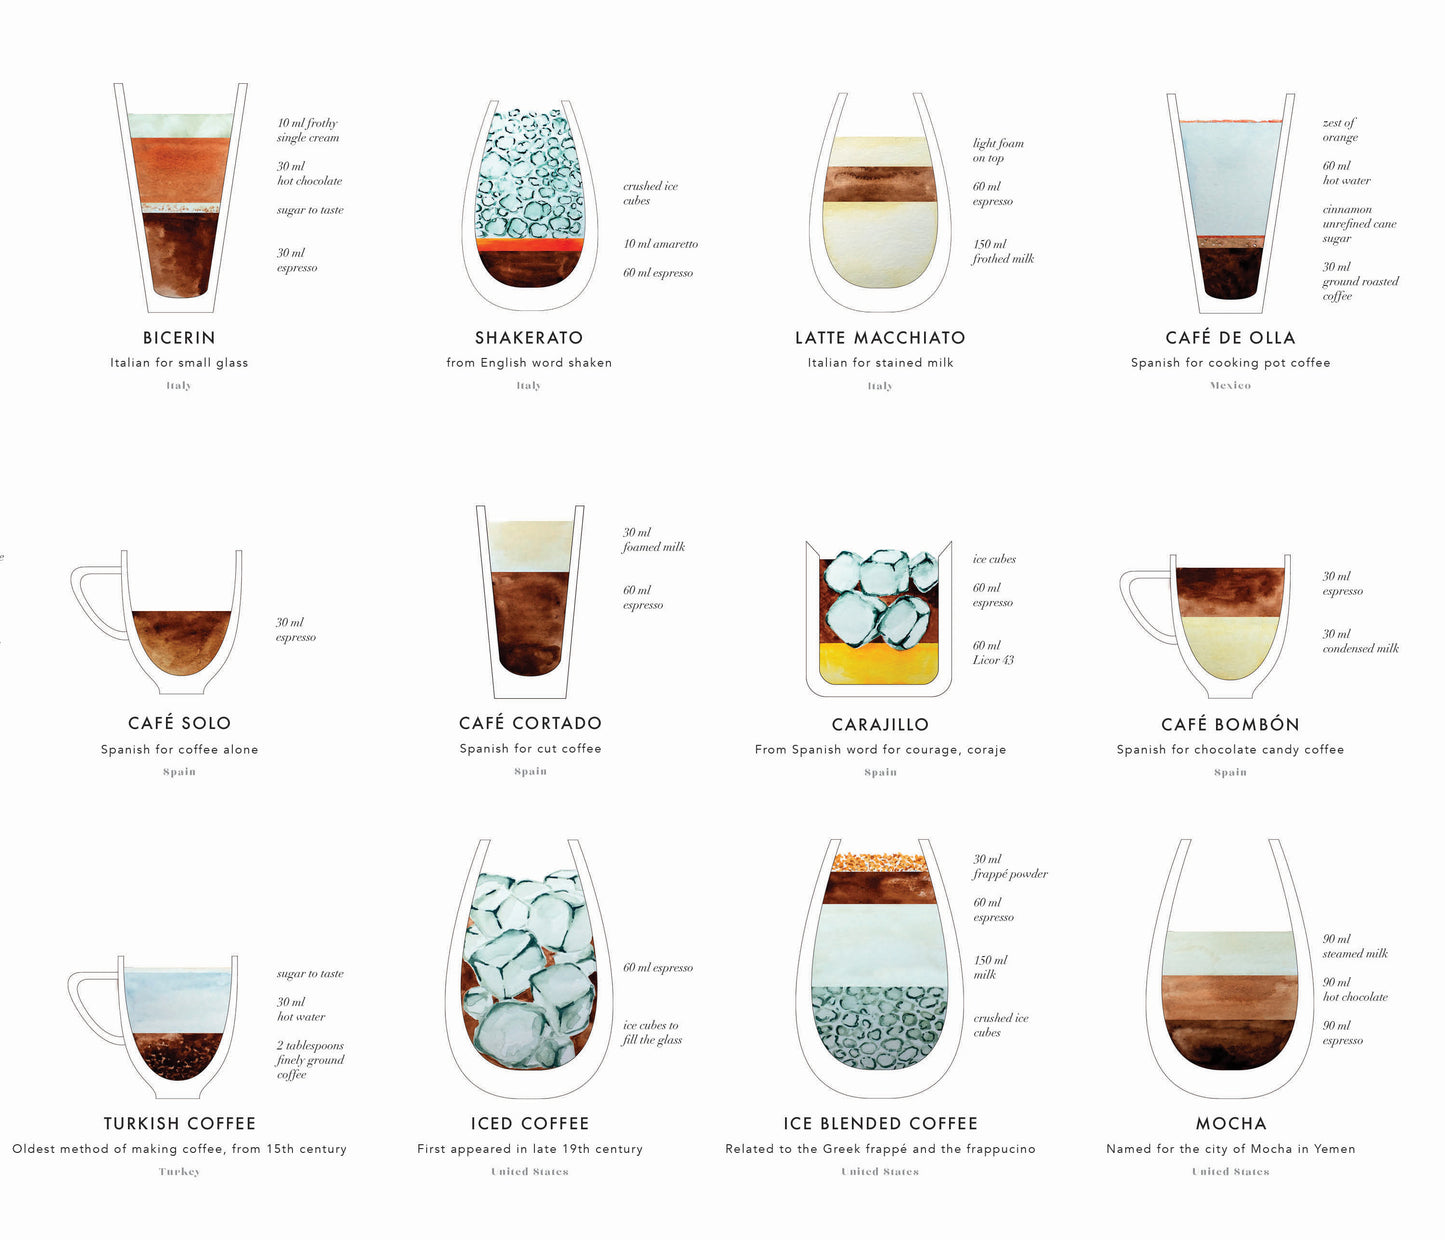 Coffee Around the World Art Print